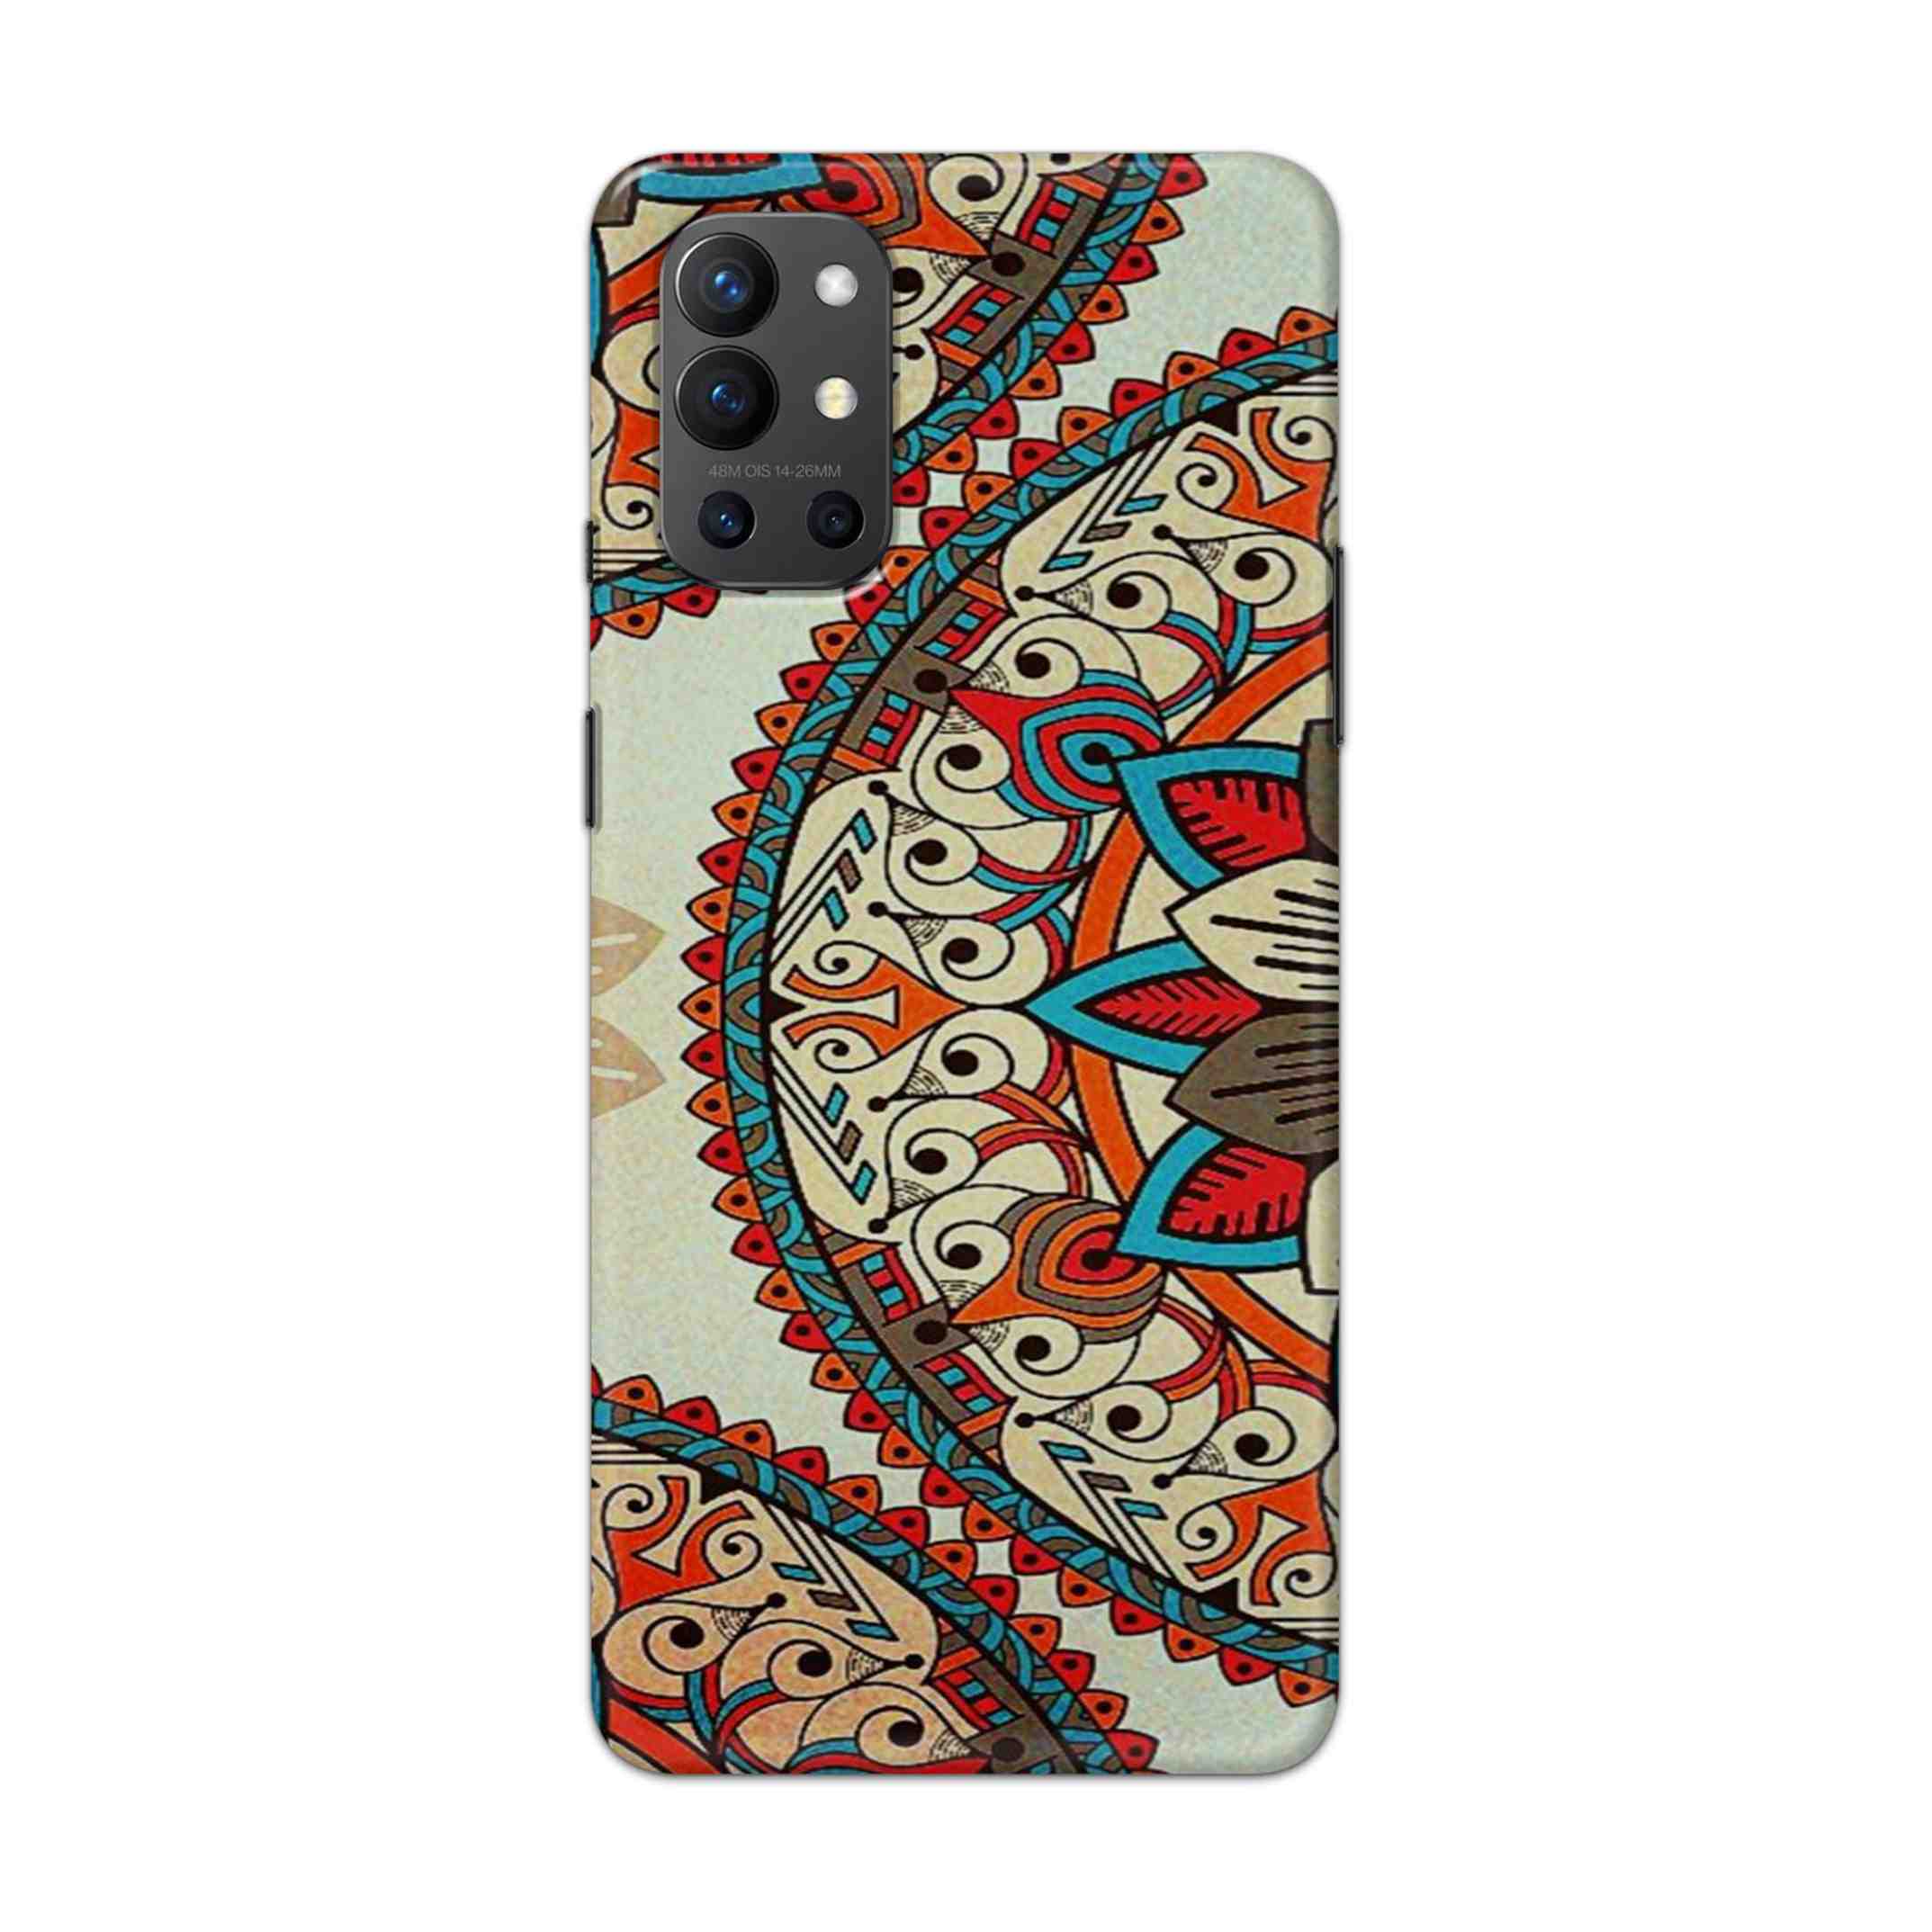 Buy Aztec Mandalas Hard Back Mobile Phone Case Cover For OnePlus 9R / 8T Online